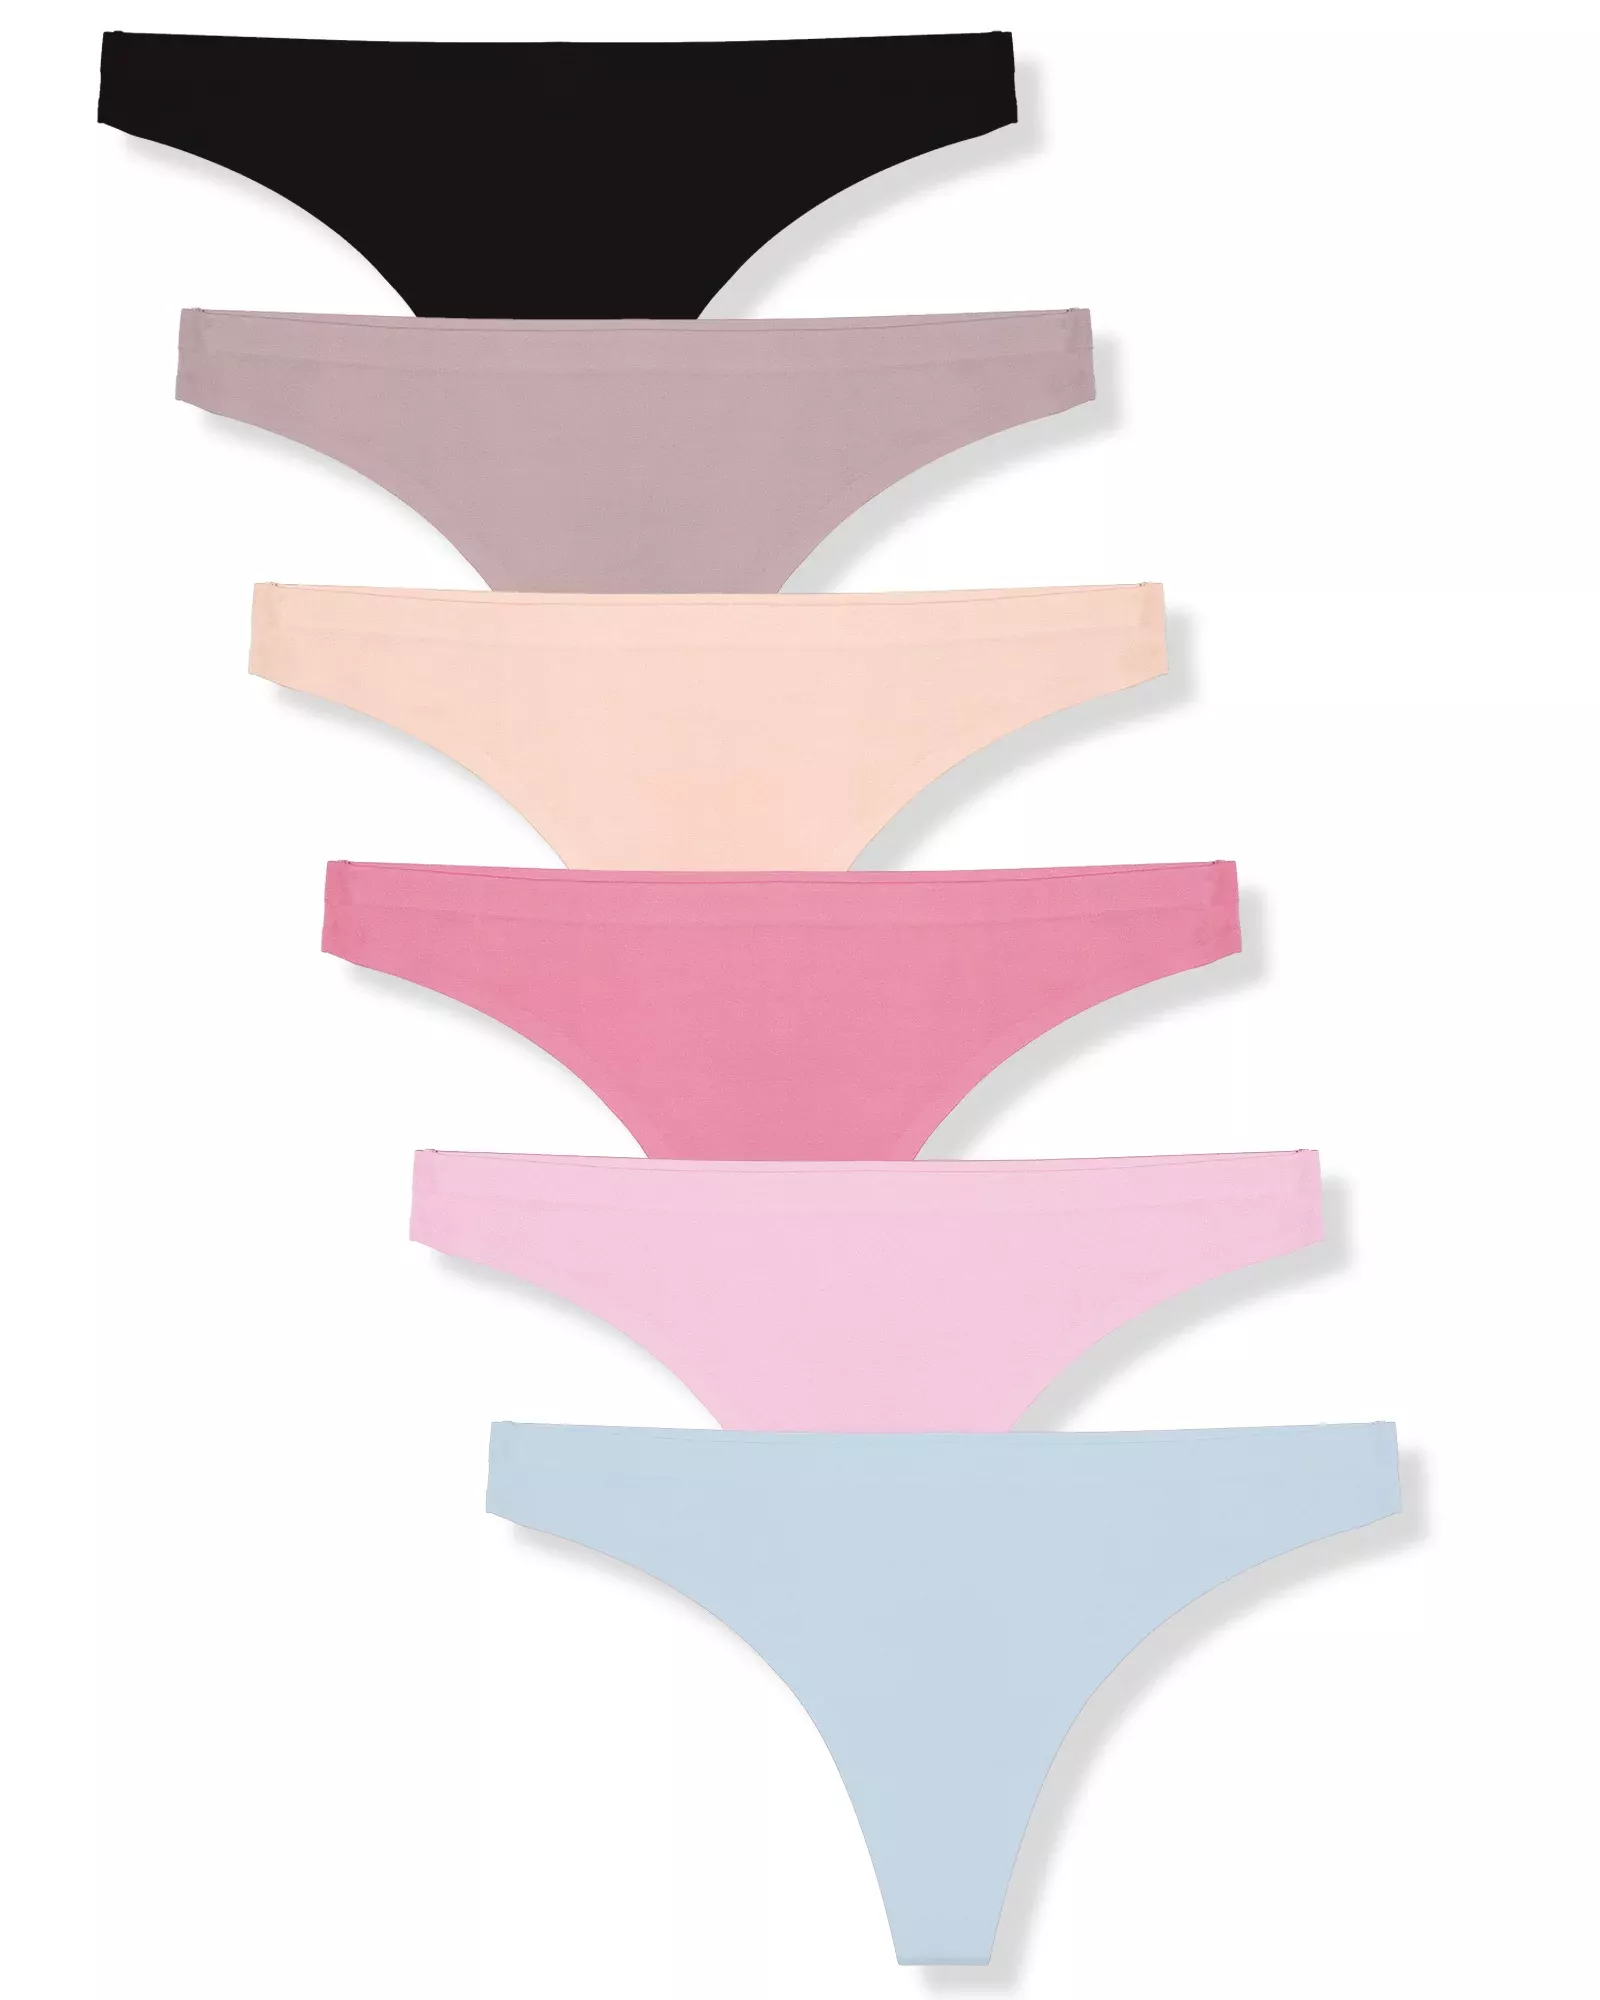 FINETOO Pack of 9 Seamless Briefs Women's Seamless Panties Soft